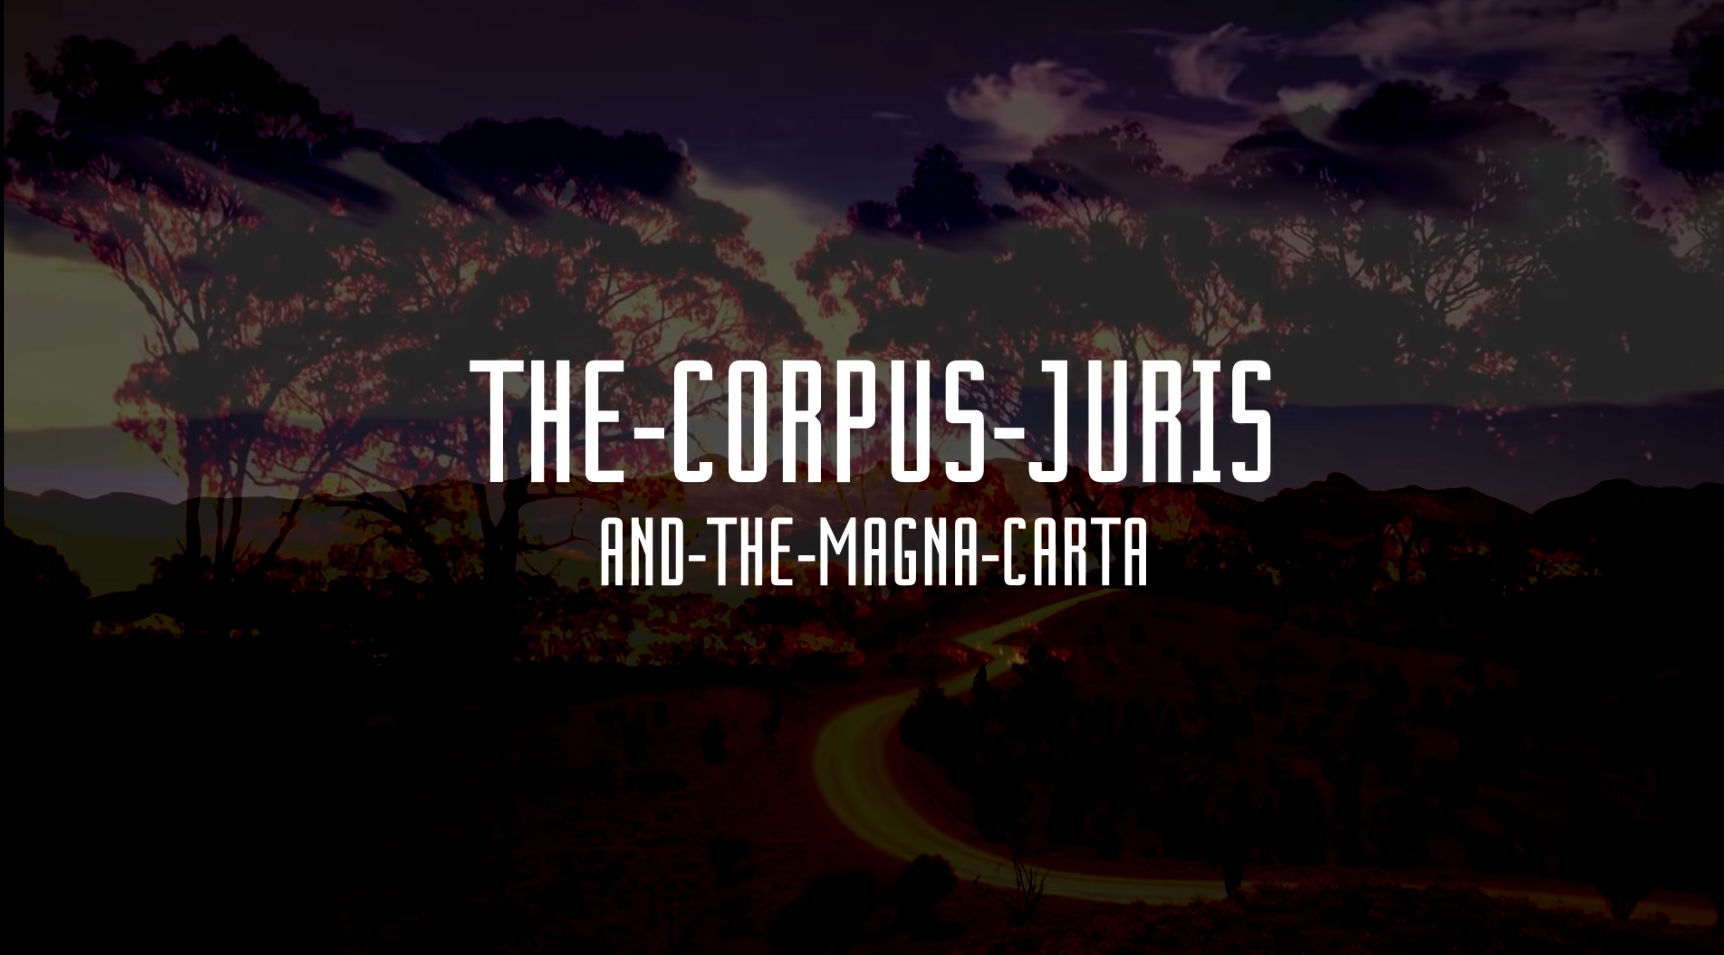 THE-CORPUS-JURIS and the Magna Carta.